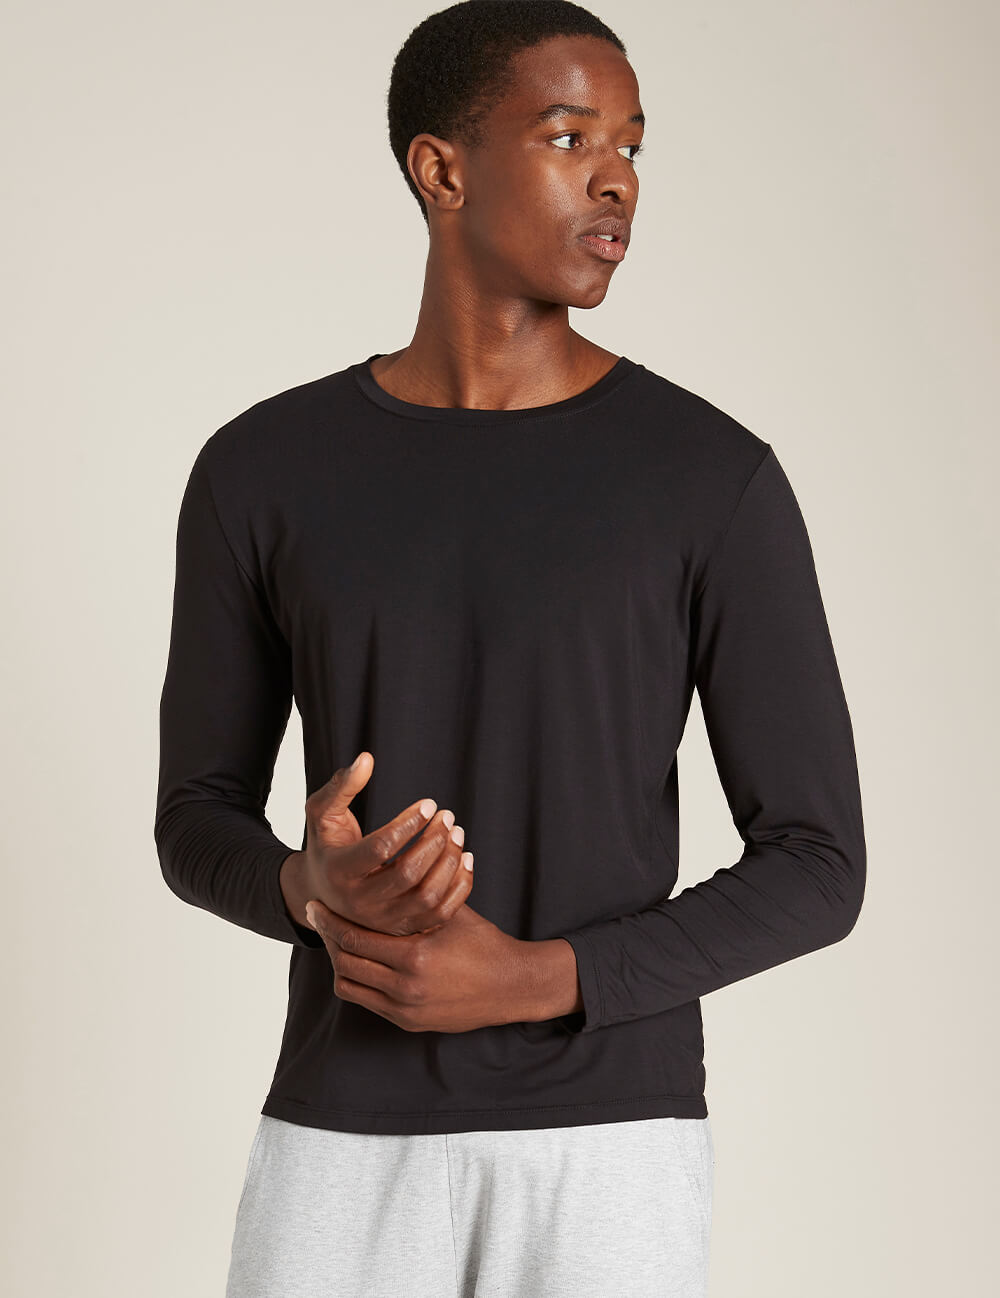 Boody Men's Long Sleeve T-Shirt, Black / XL